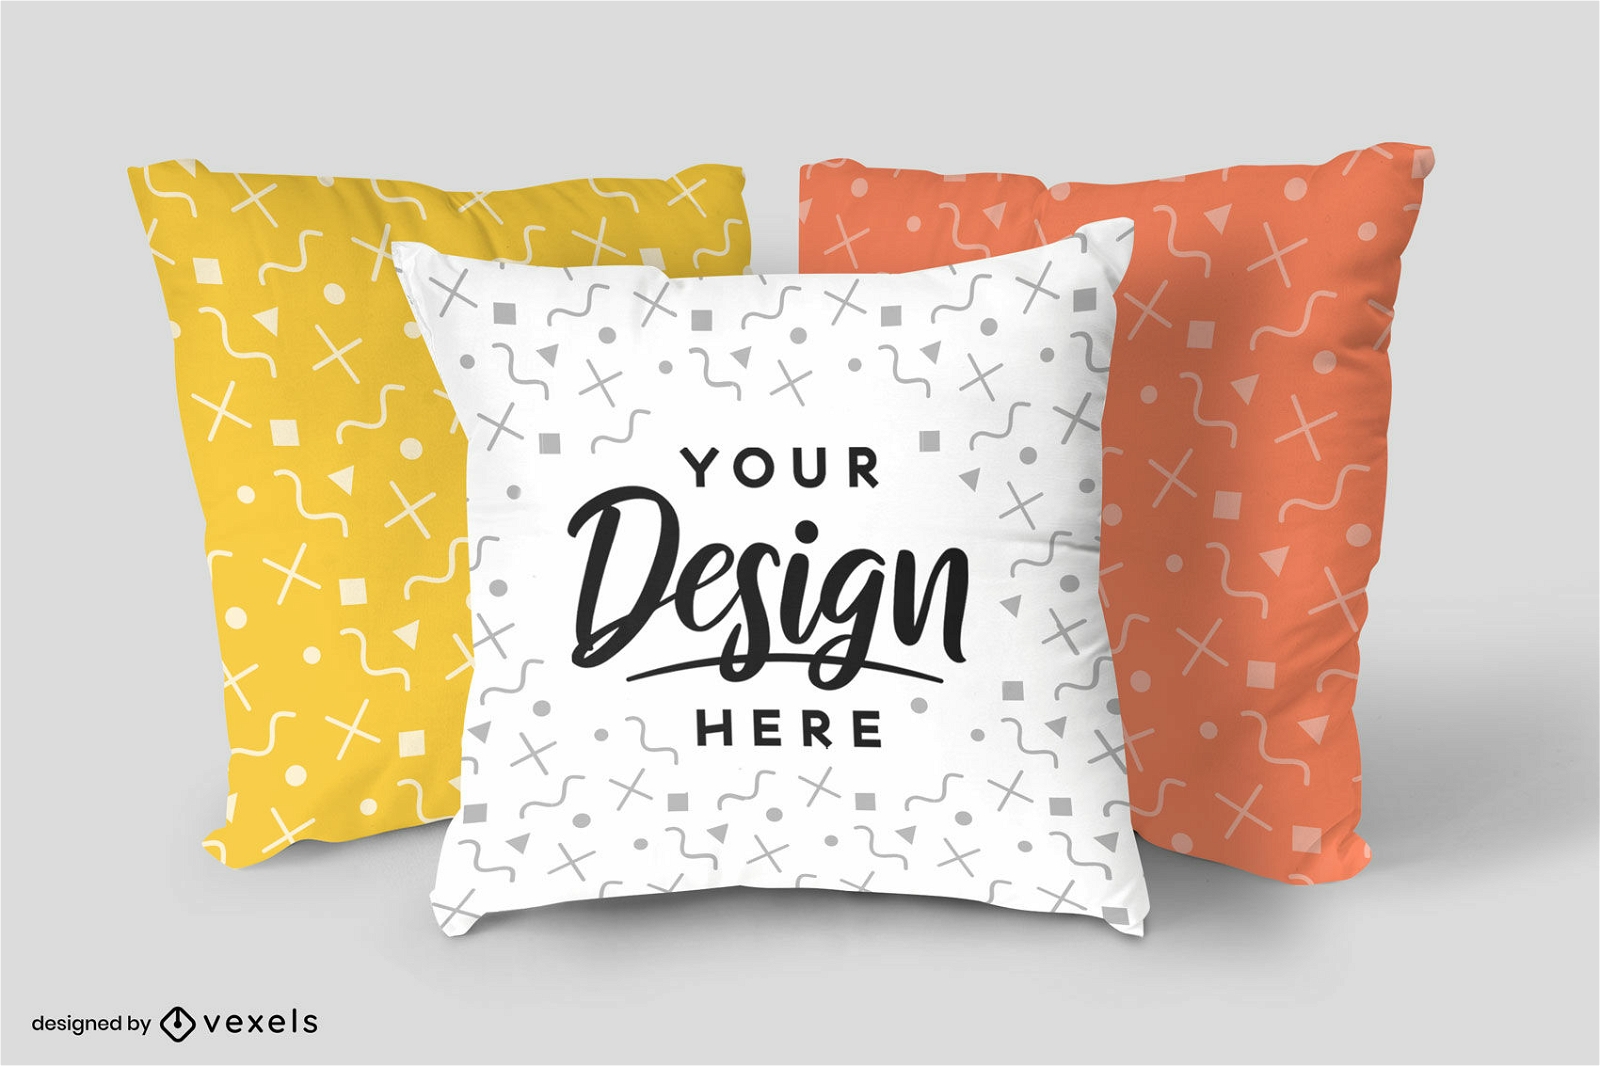 Three throw pillows mockup design